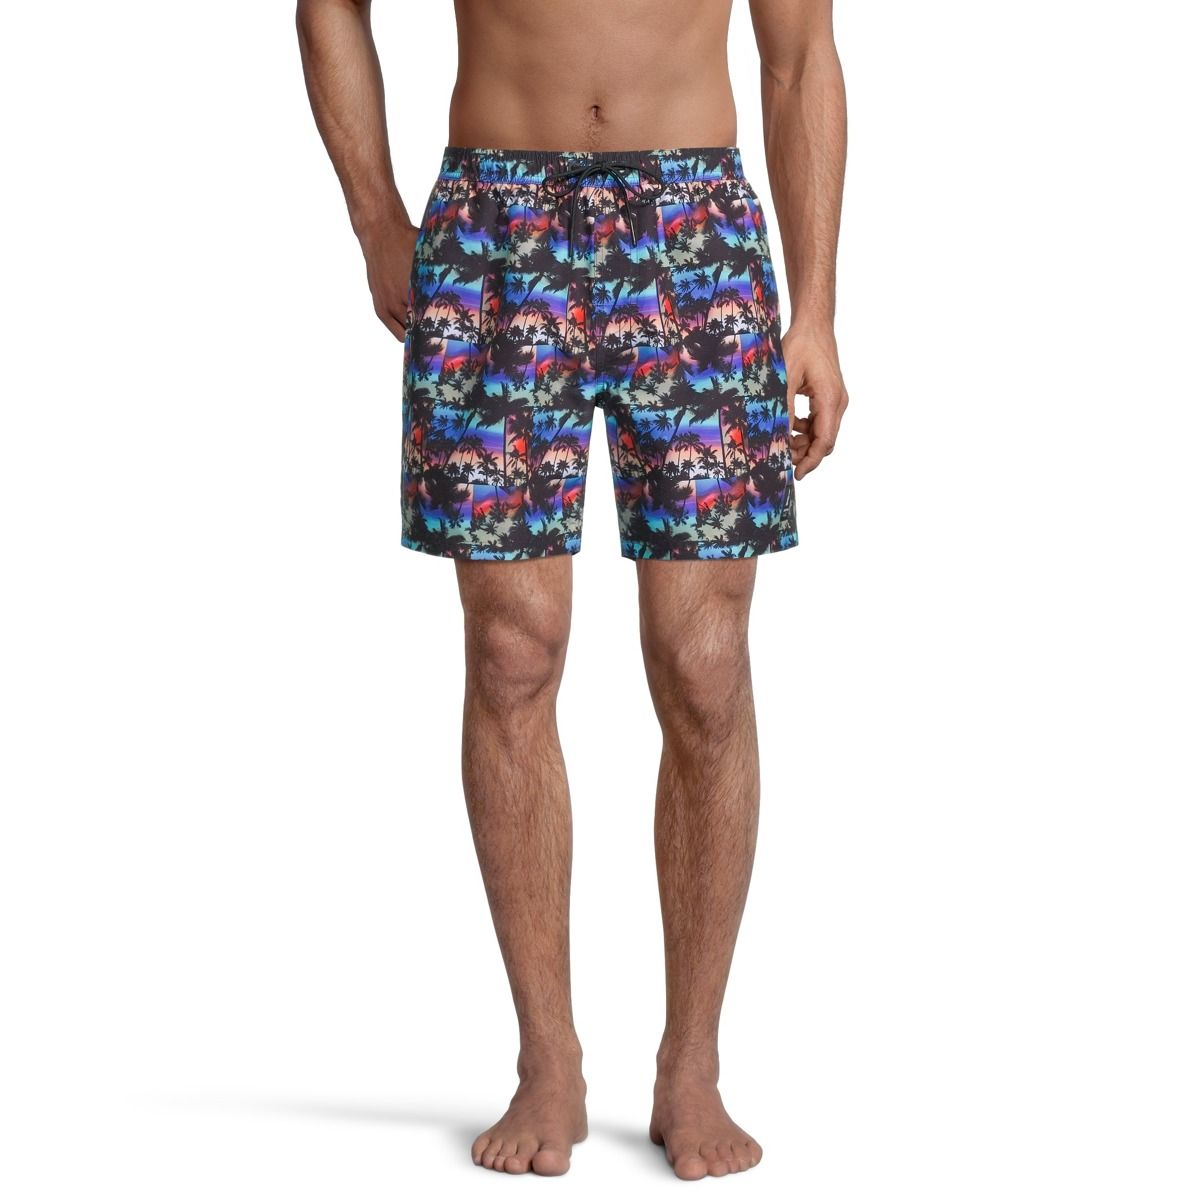 Ripzone Men's Raith Palm Swim Shorts Quick-Dry UPF